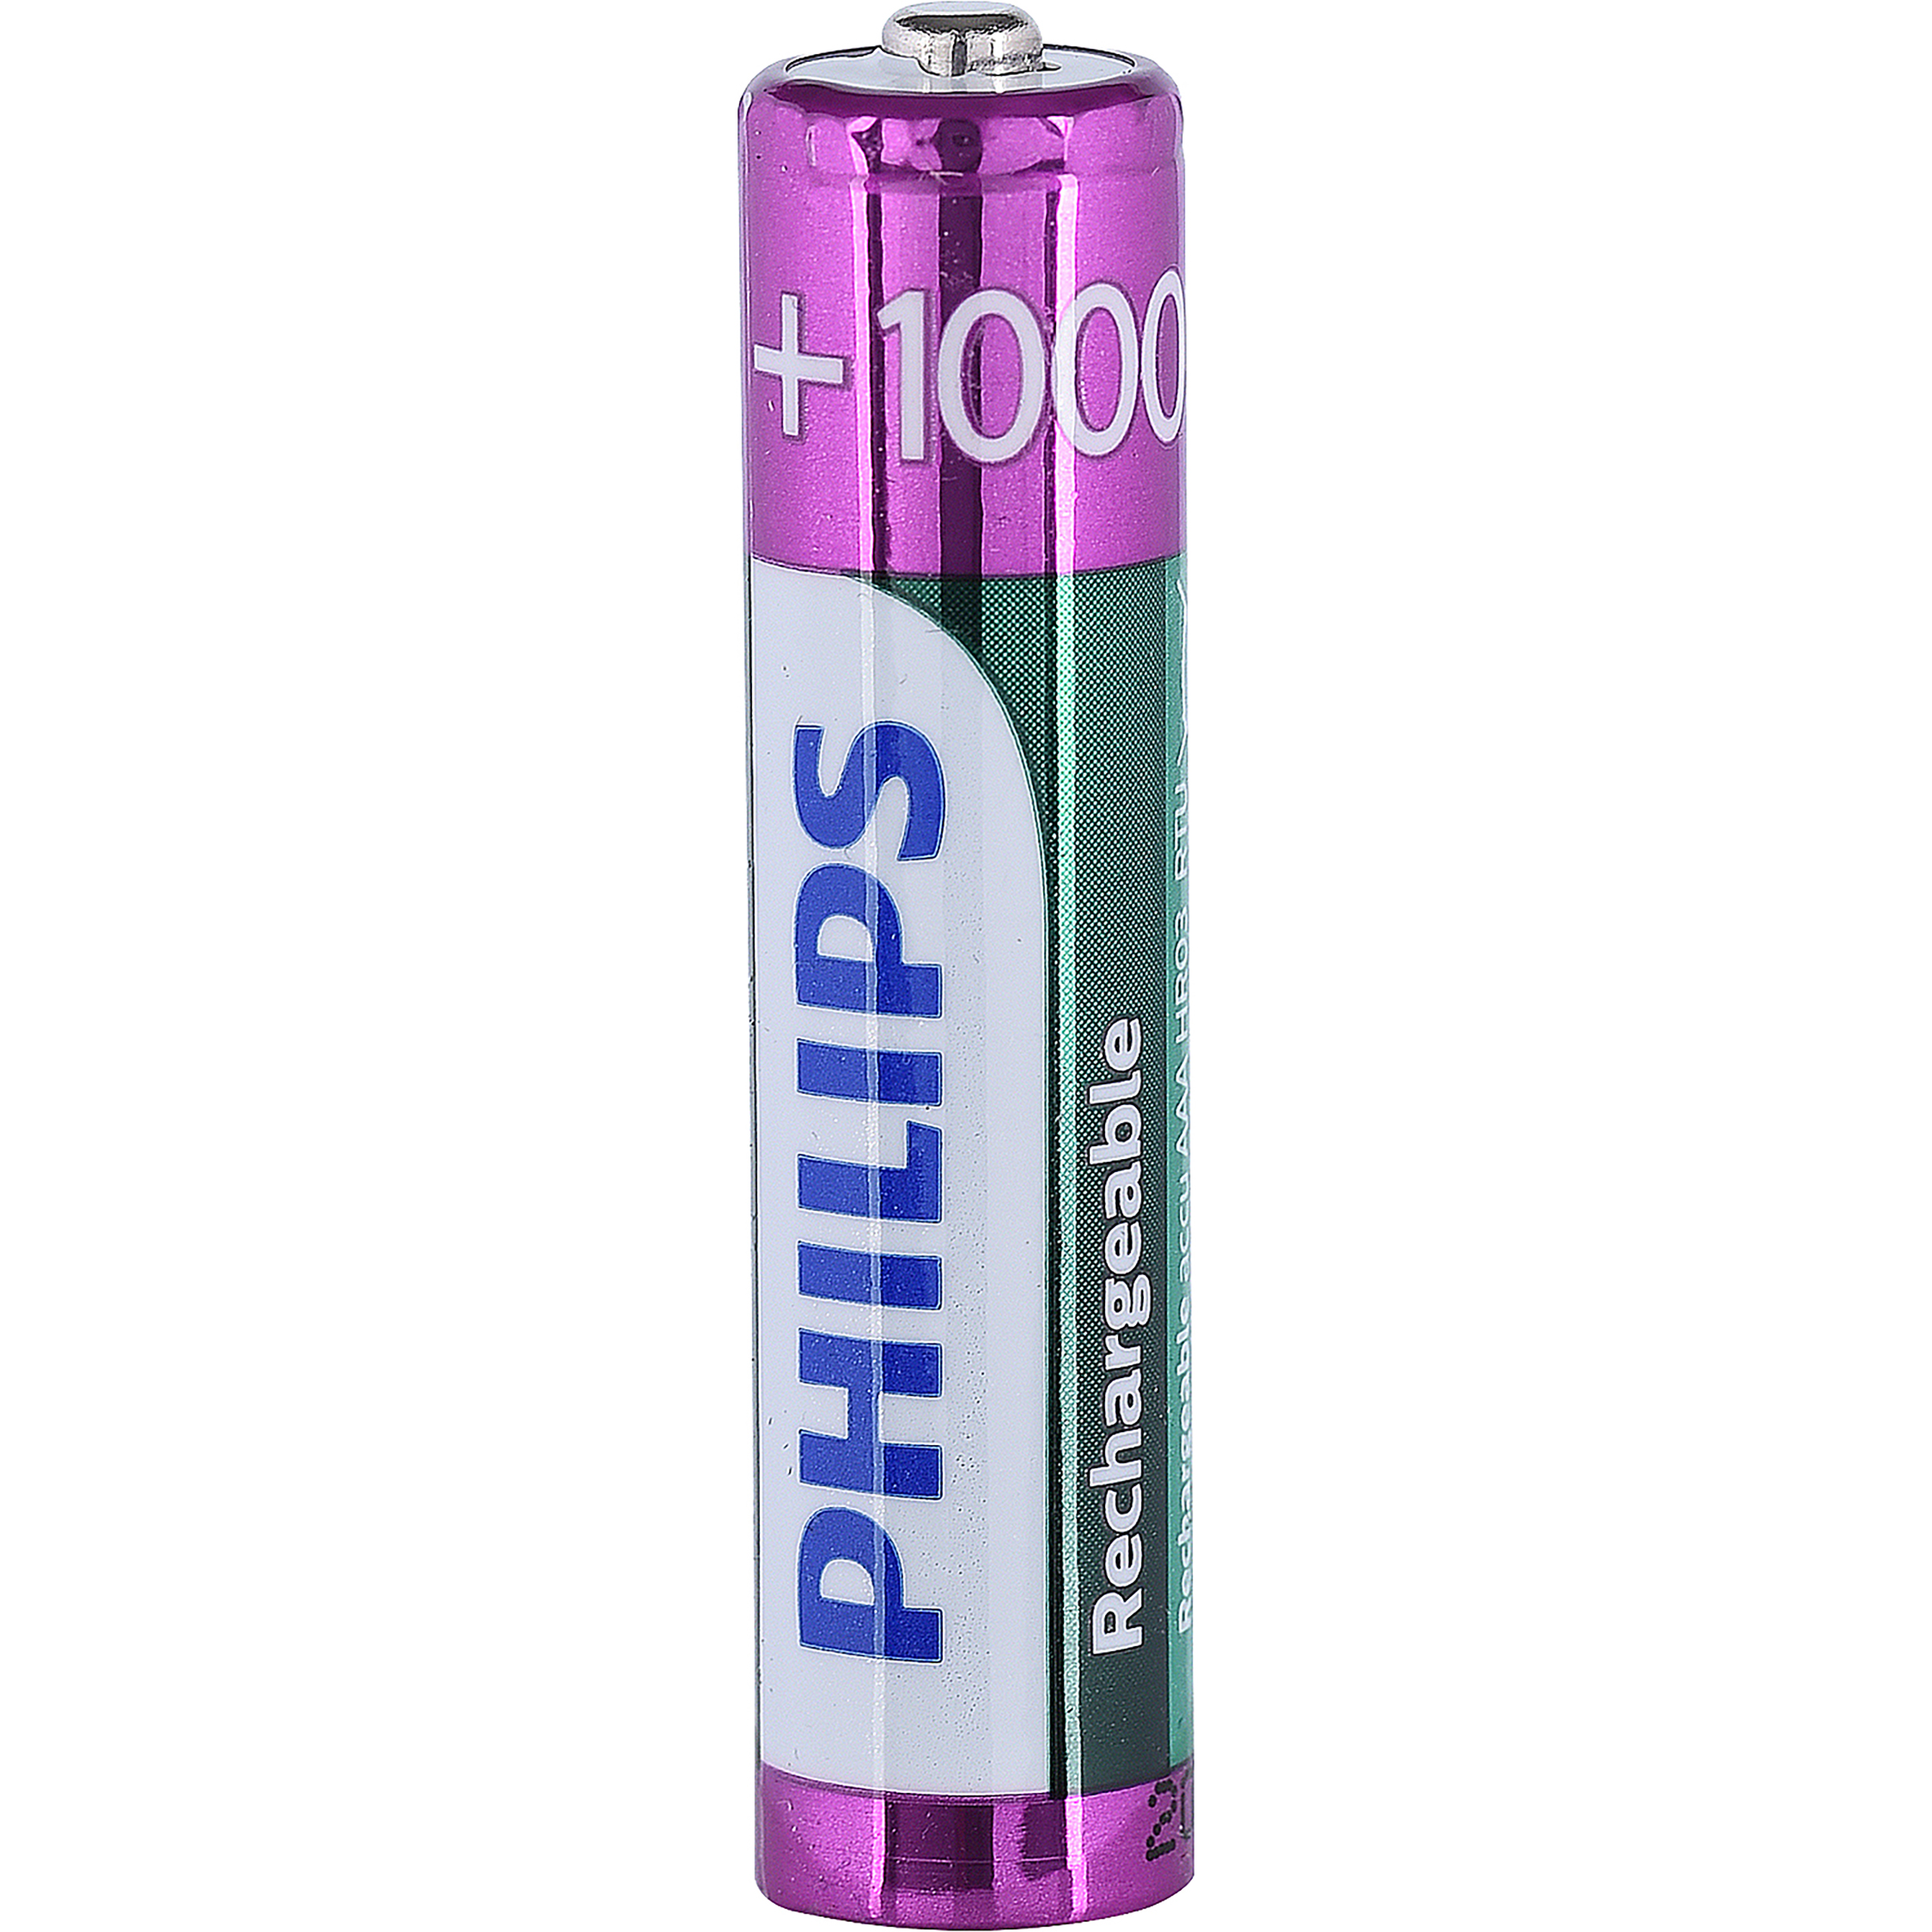 Philips Ready to use 1000mAh -  